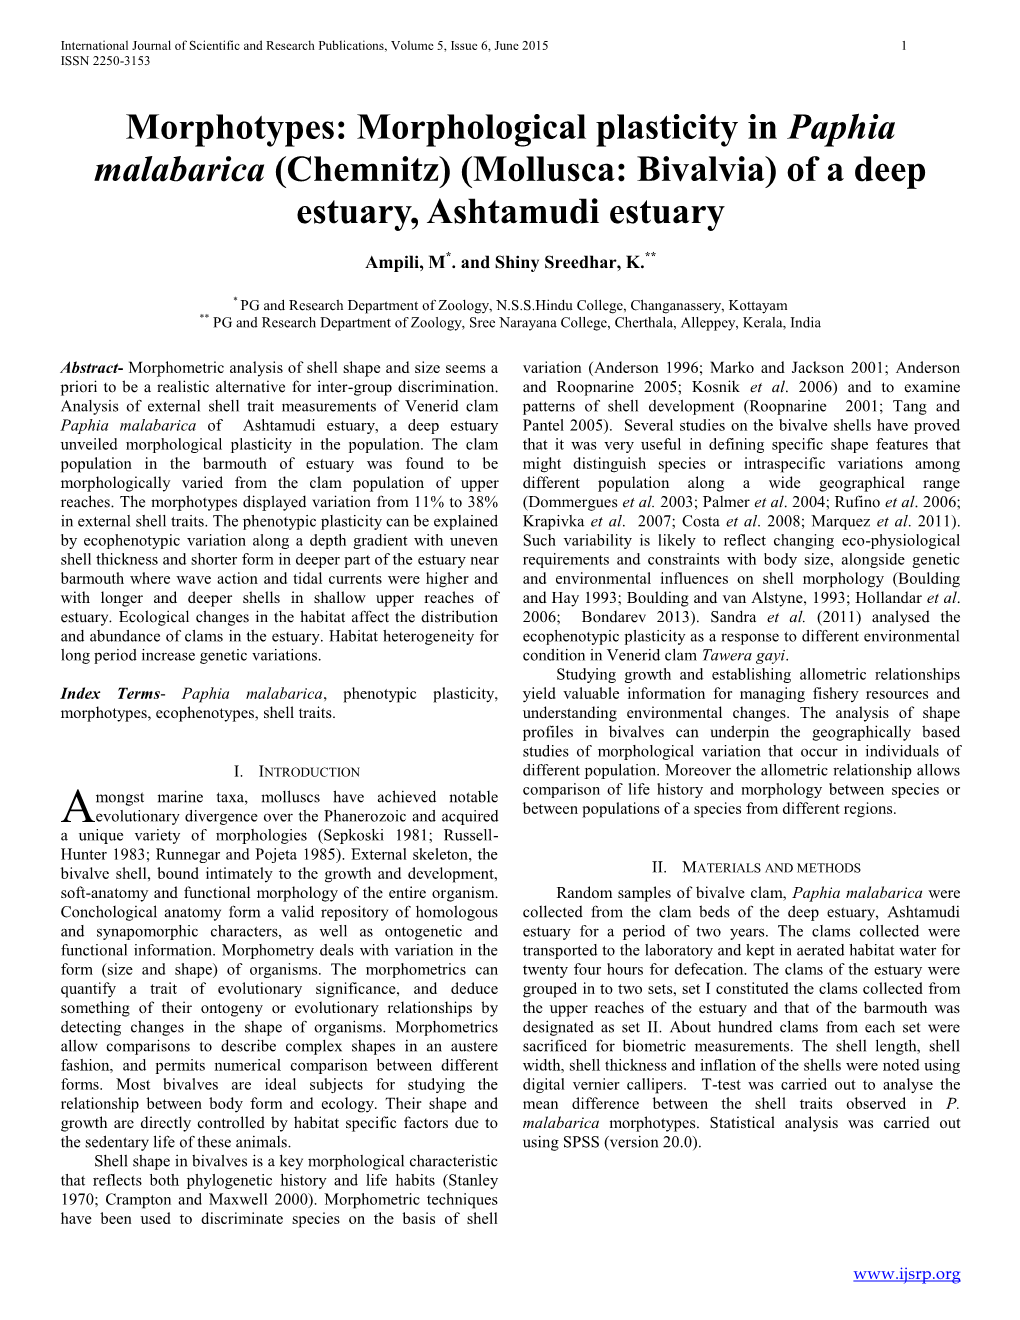 Morphological Plasticity in Paphia Malabarica (Chemnitz) (Mollusca: Bivalvia) of a Deep Estuary, Ashtamudi Estuary